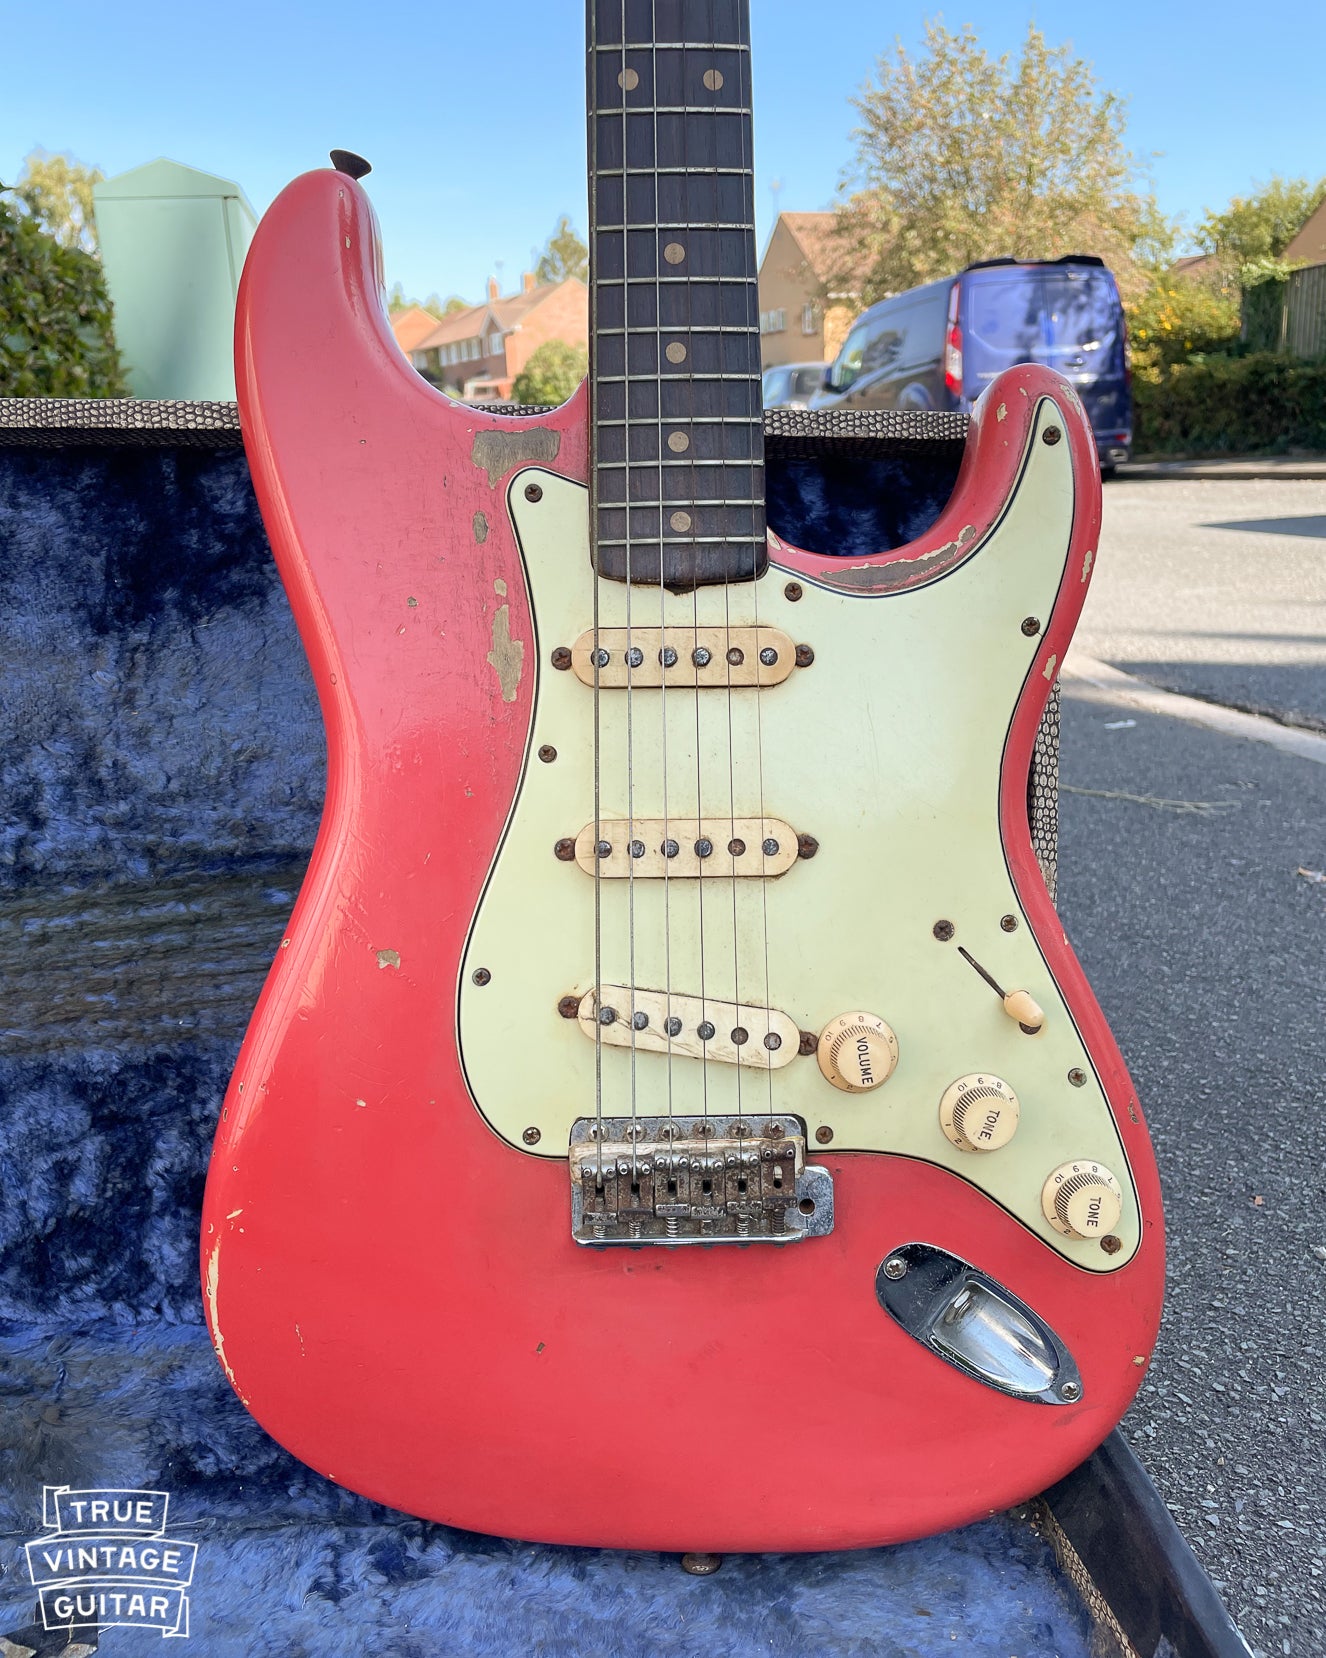 Fender Stratocaster 1962 guitar in original Fiesta Red finish in London, England